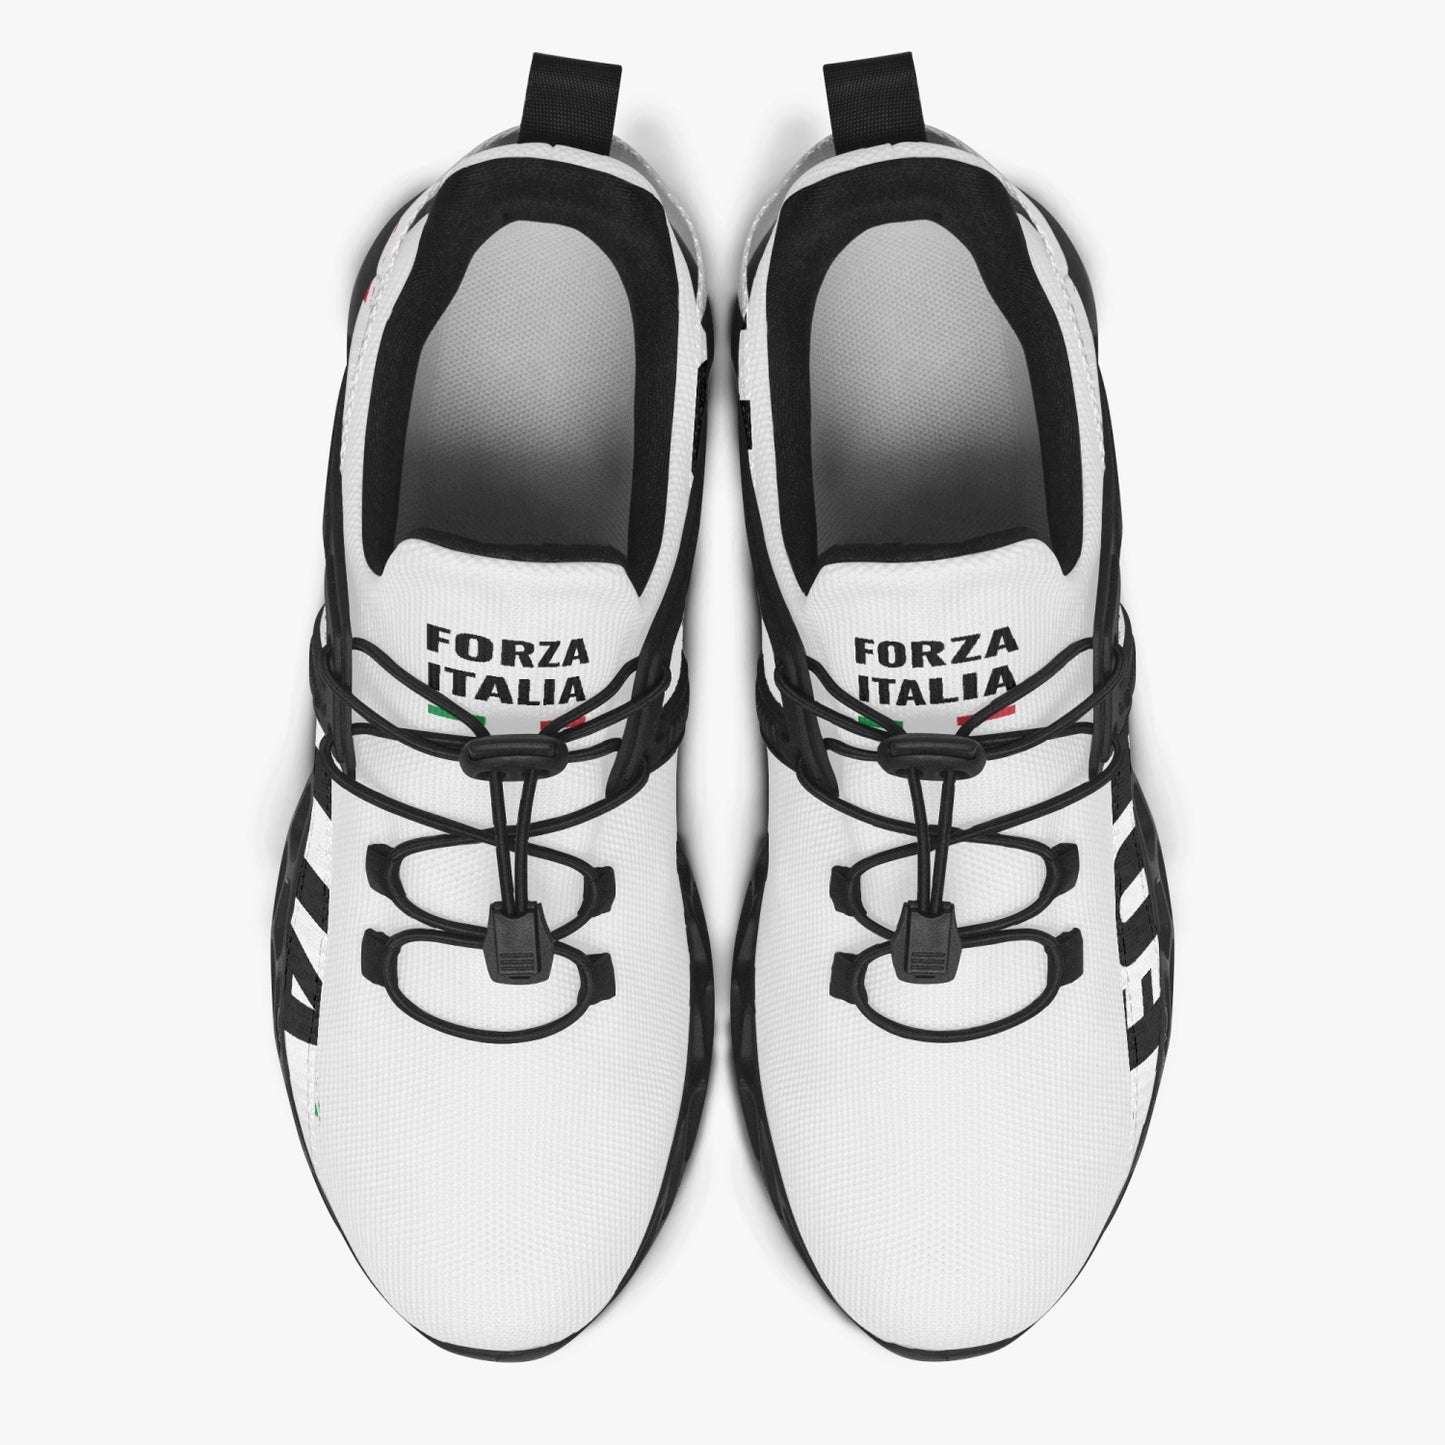 Italy Running Shoes Mesh - "Forza Italia" White